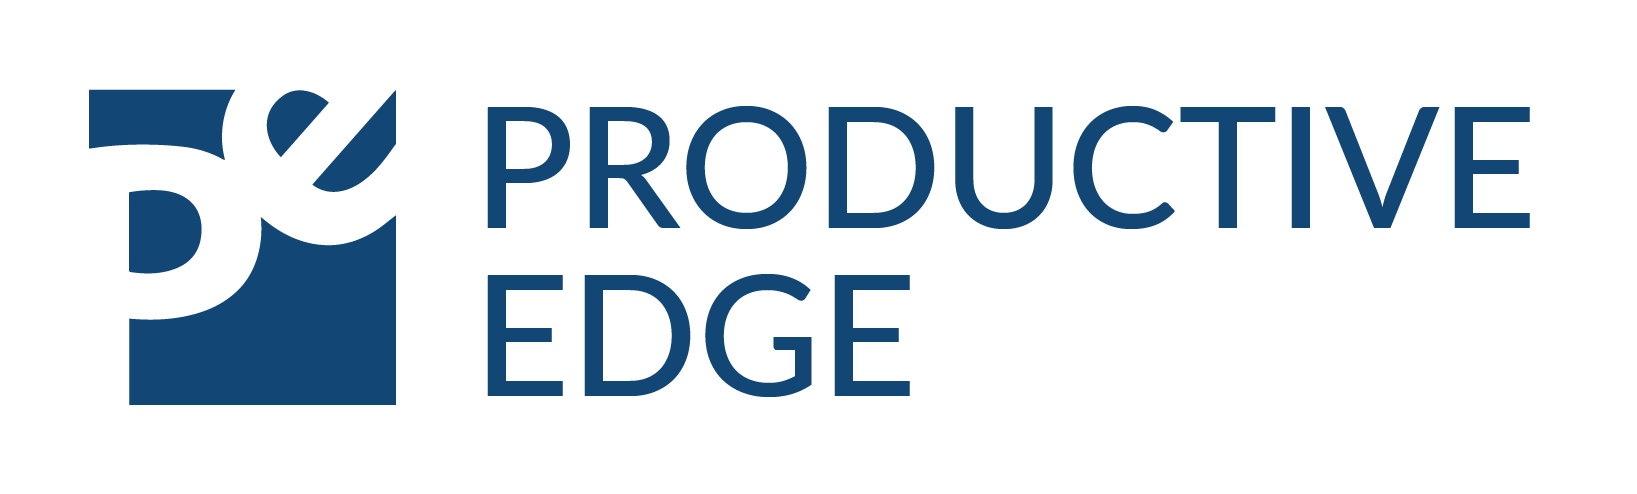 Productive Edge Logo